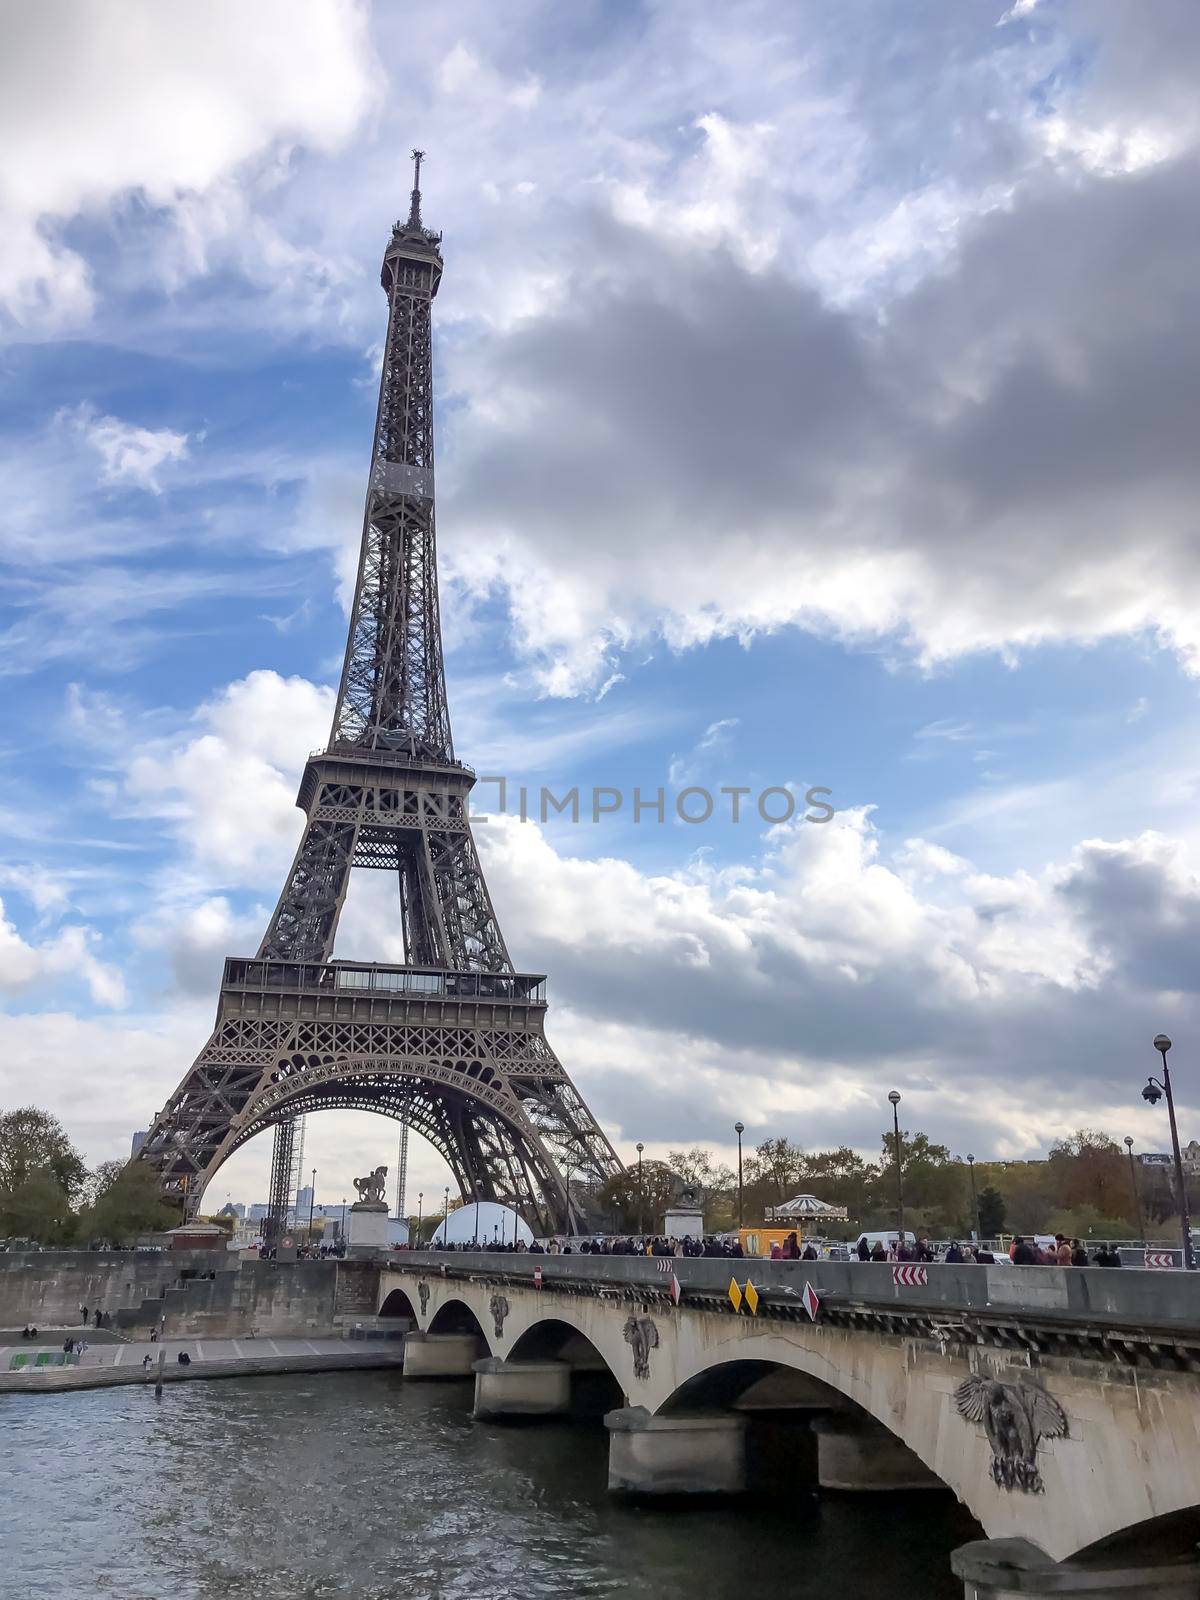 Eiffel Tower at blue cloudy sky, Paris, France. High quality photo